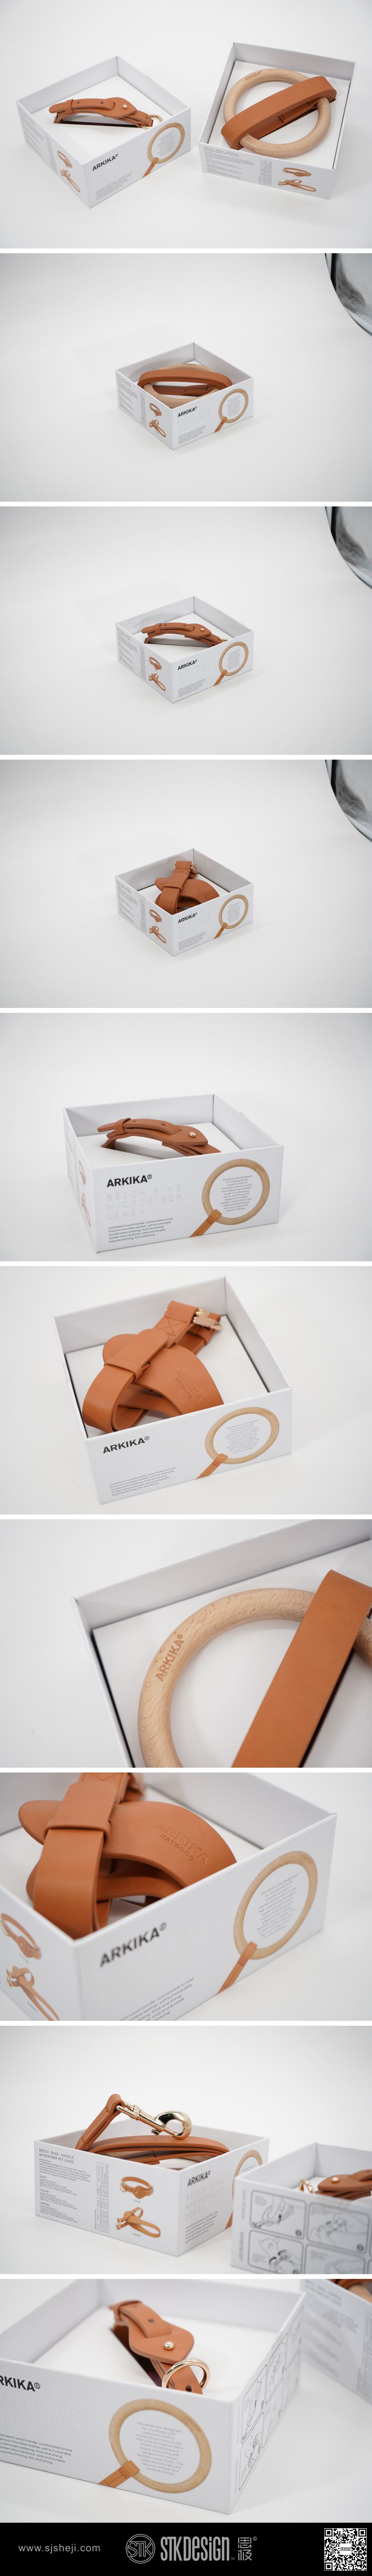 arkika宠物用品圆环系列包装设计